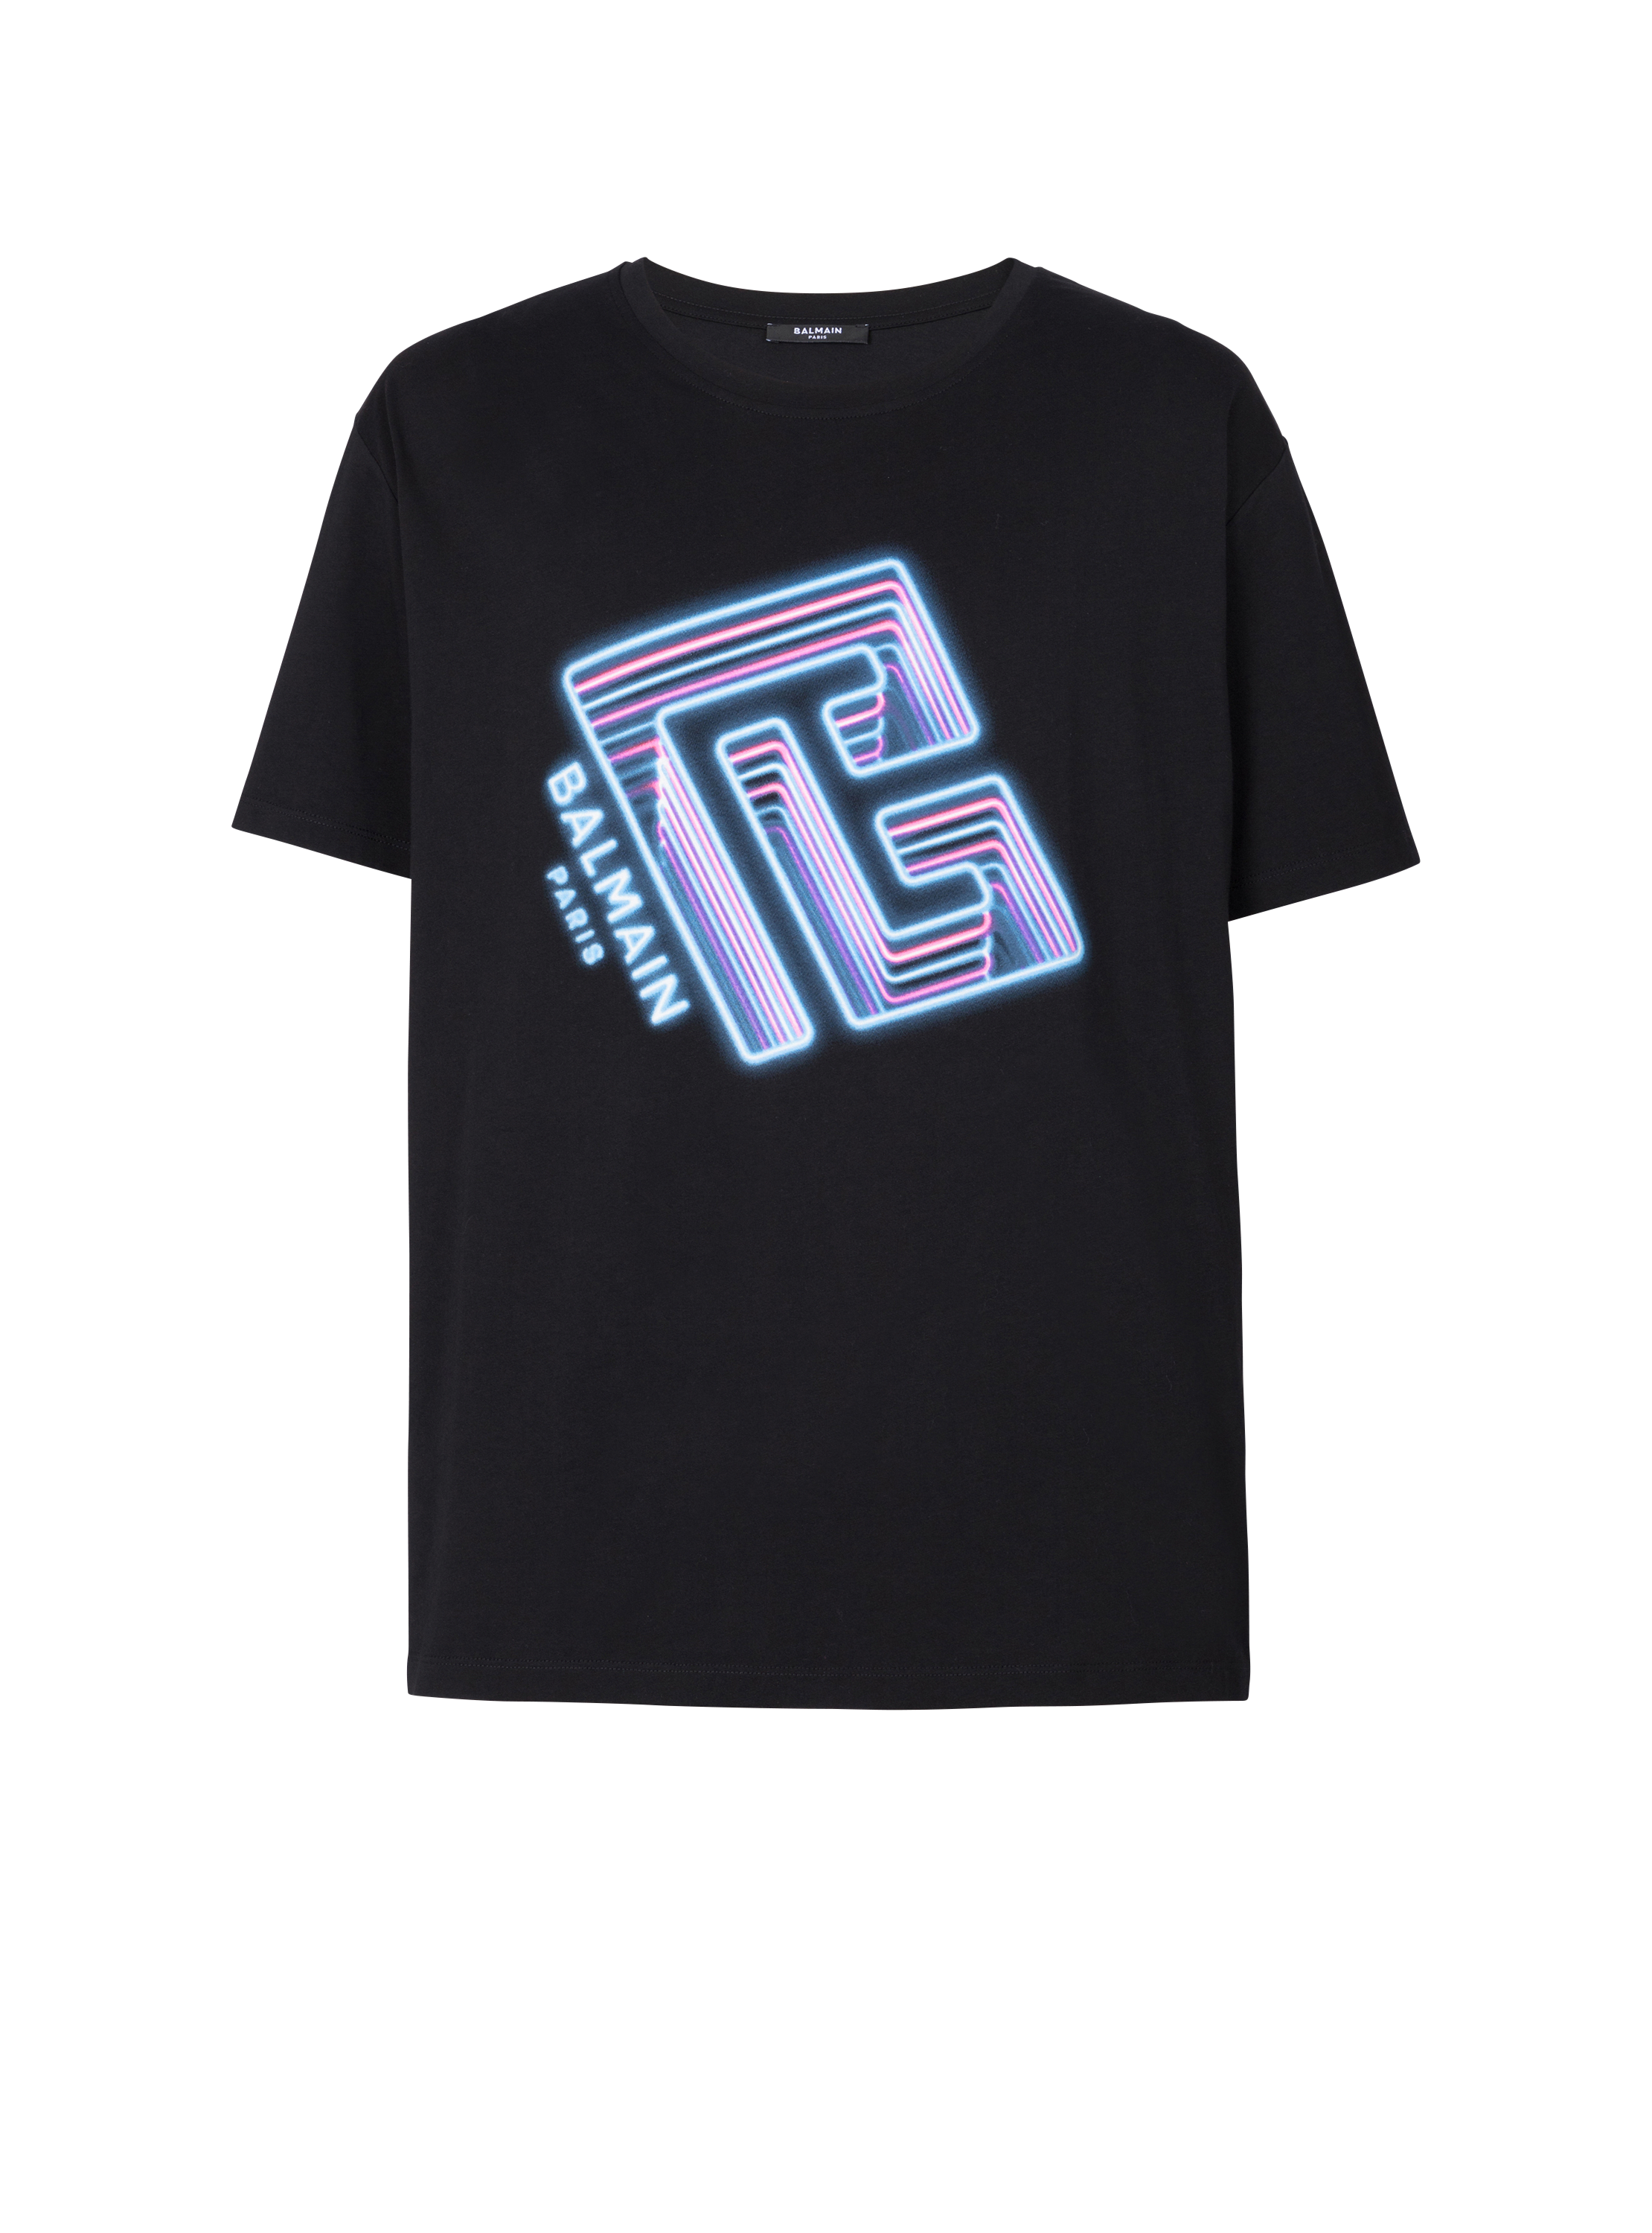 Neon logo T-shirt, black, hi-res